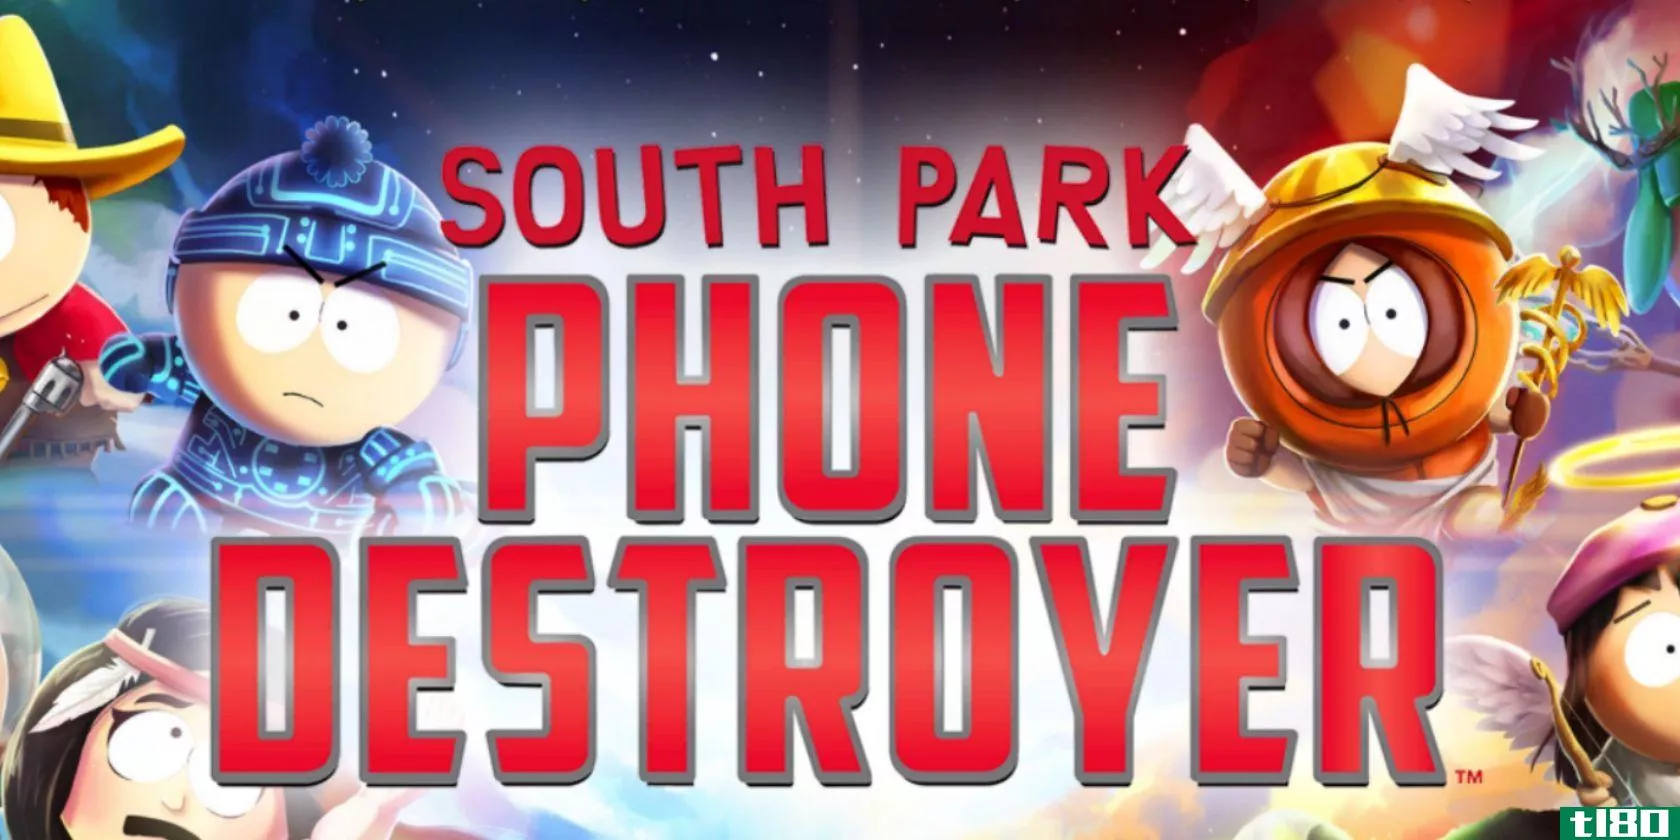 south-park-phone-destroyer